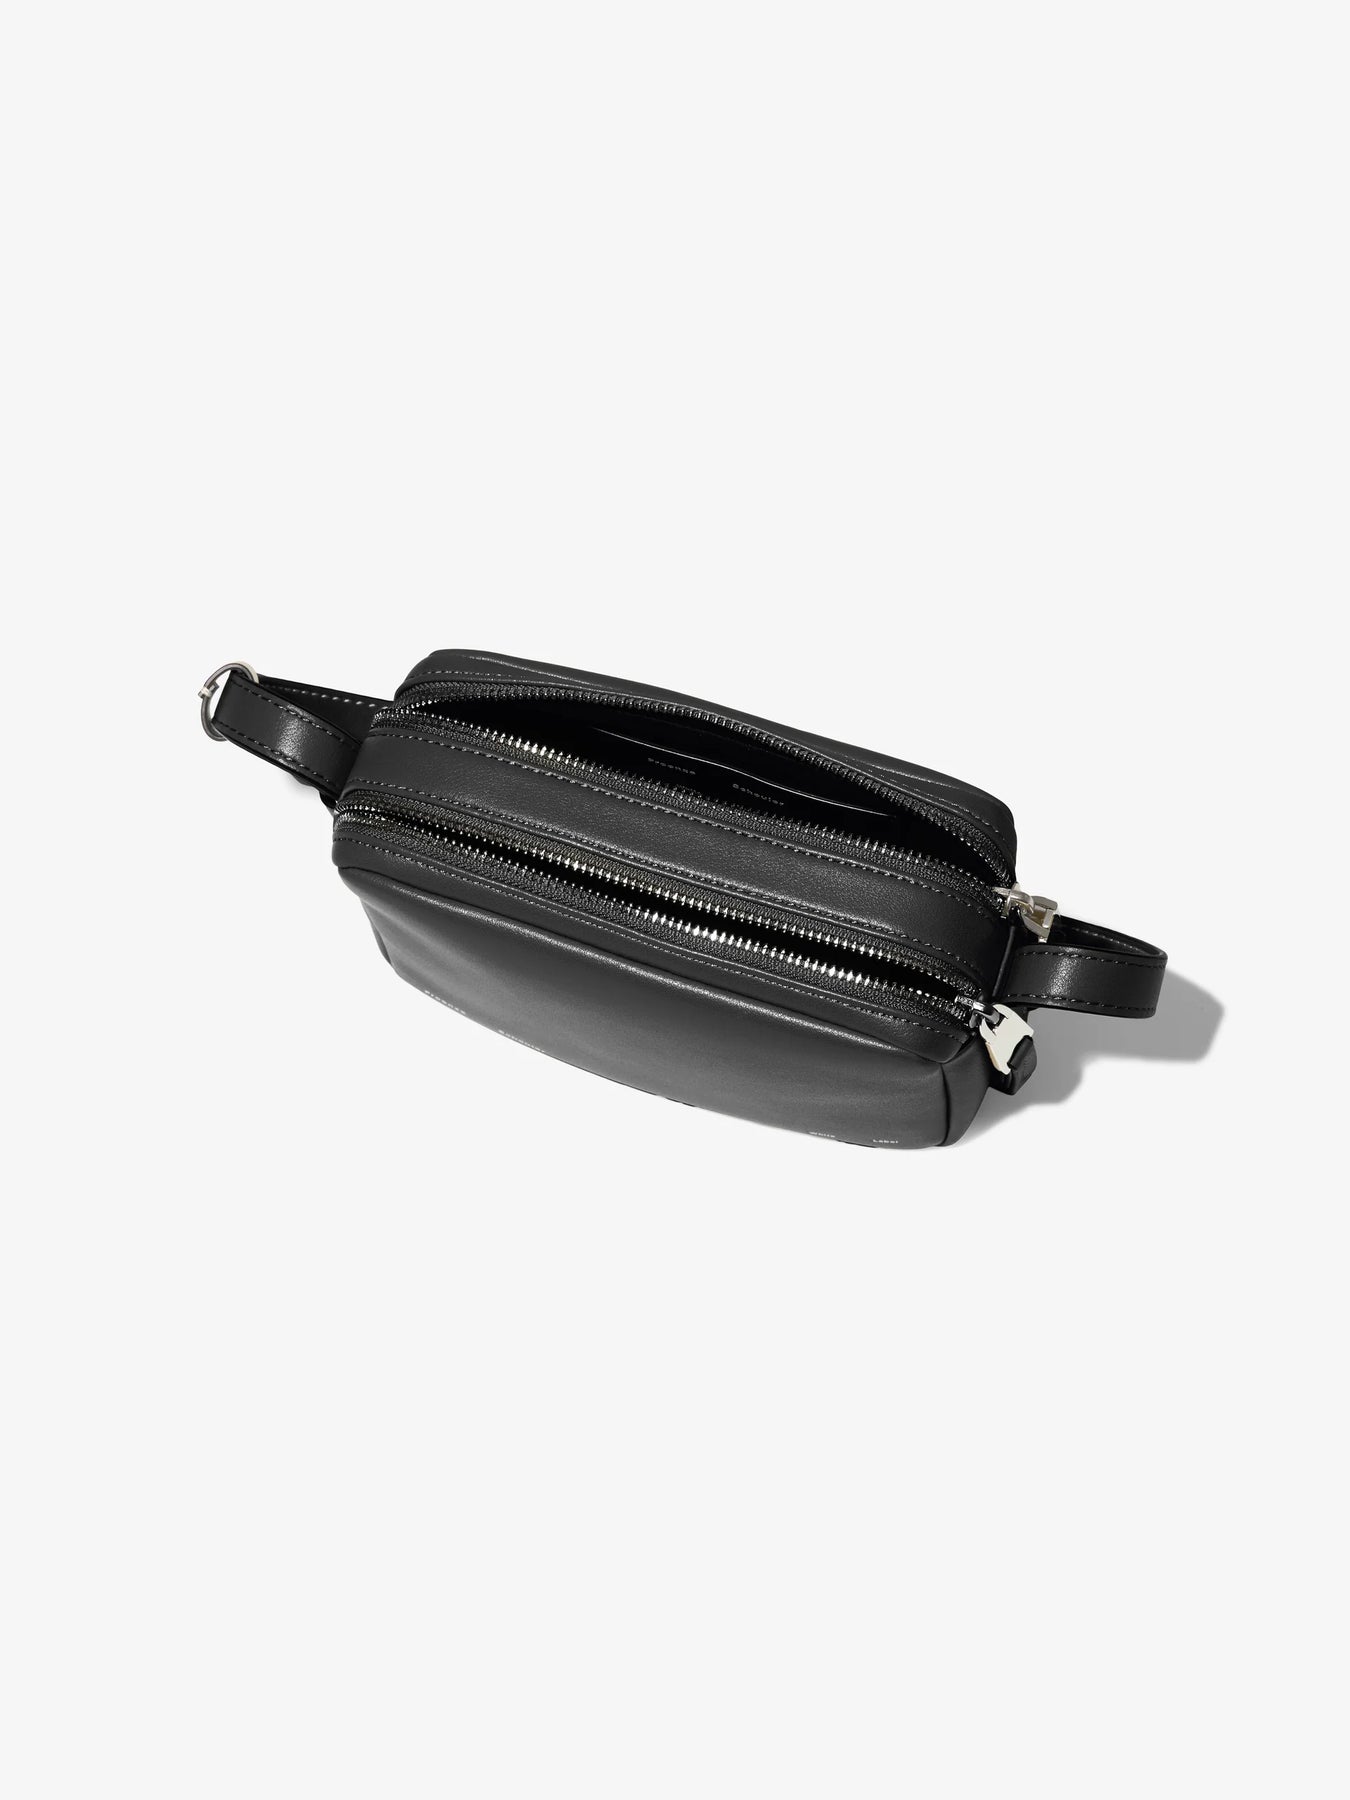 Watts Leather Camera Bag - Black